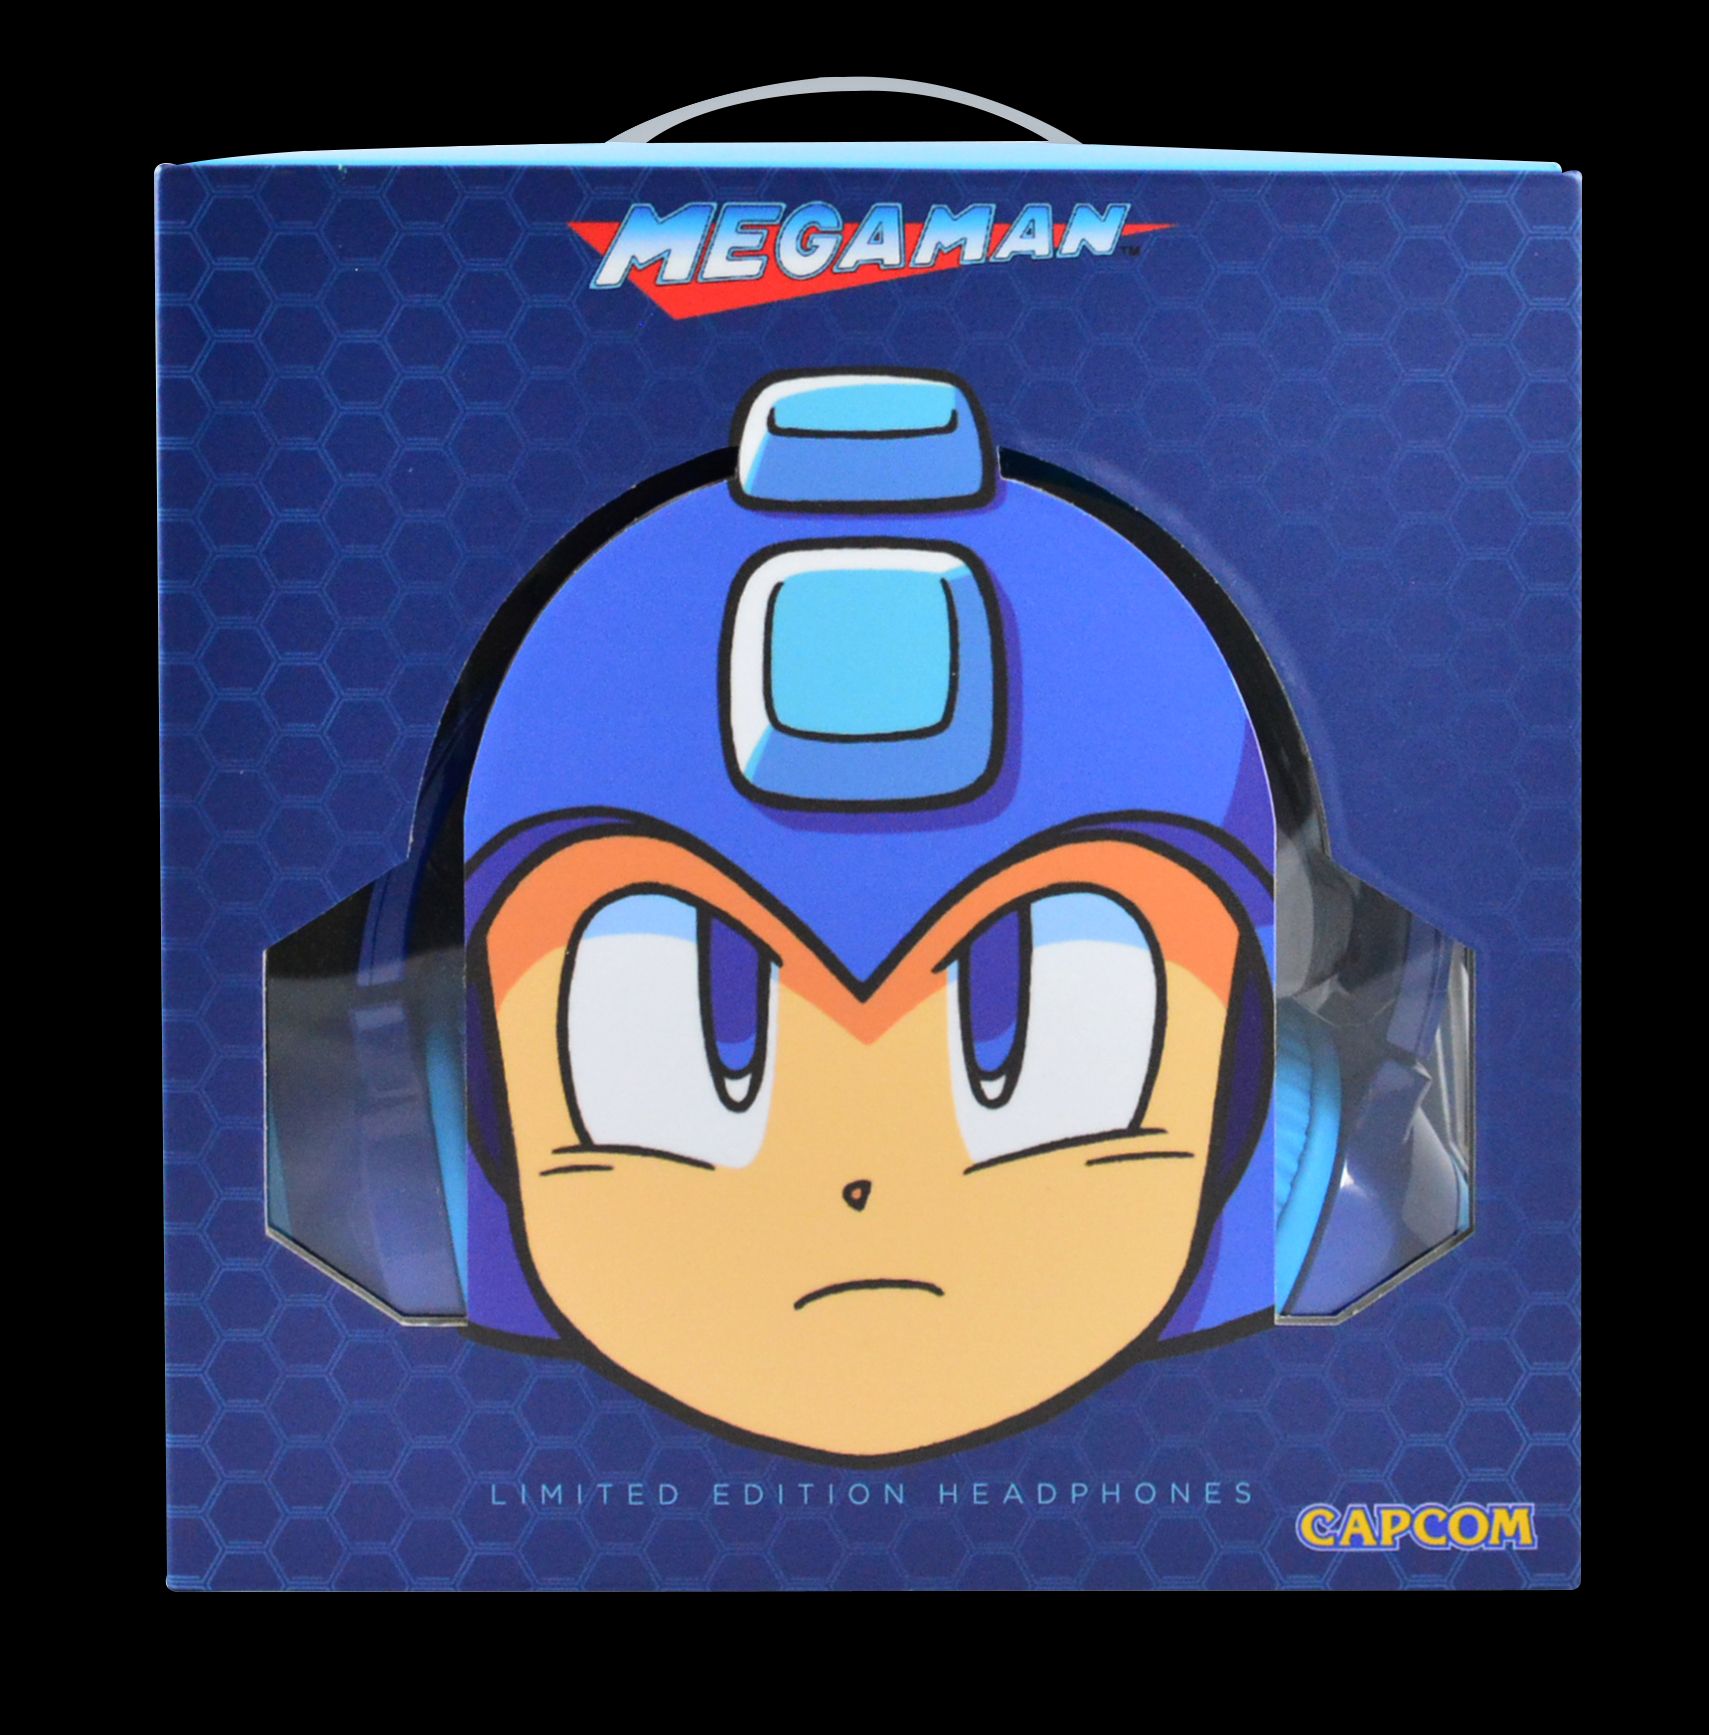 Megaman Headphones casque limited edition